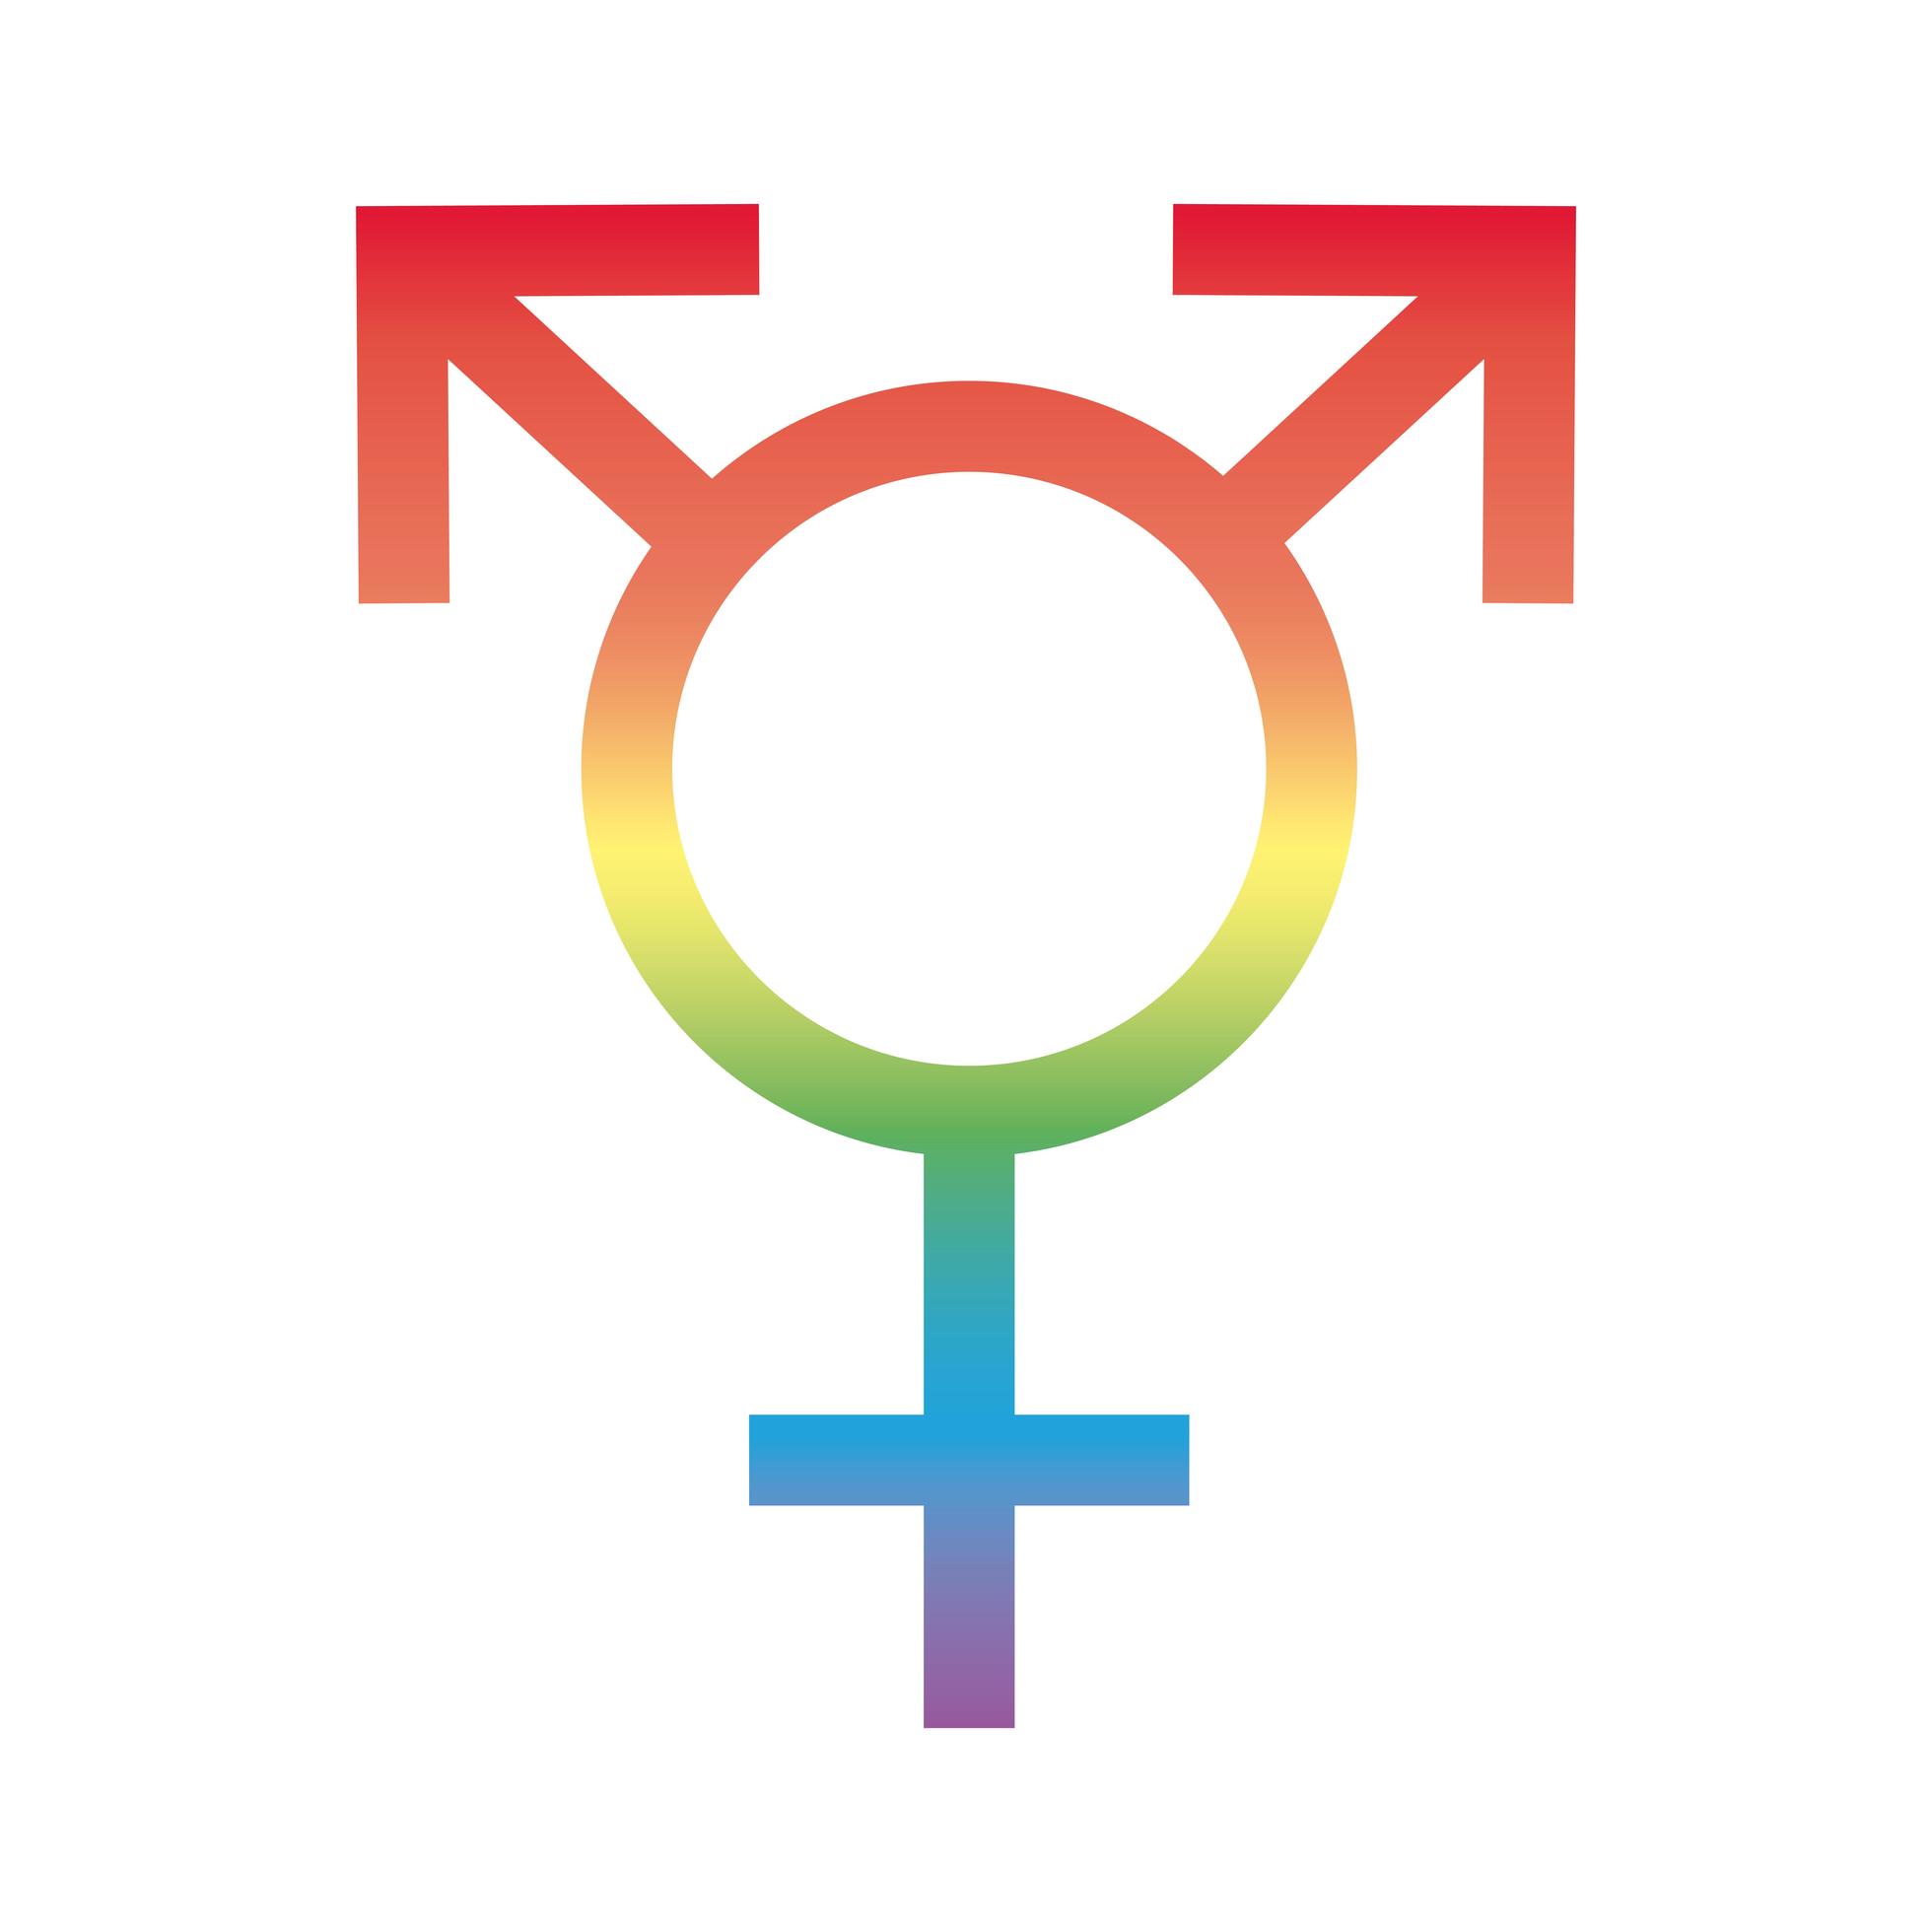 Bisexual Man Gender Symbol Of Sexual Orientation Gradient Style Icon